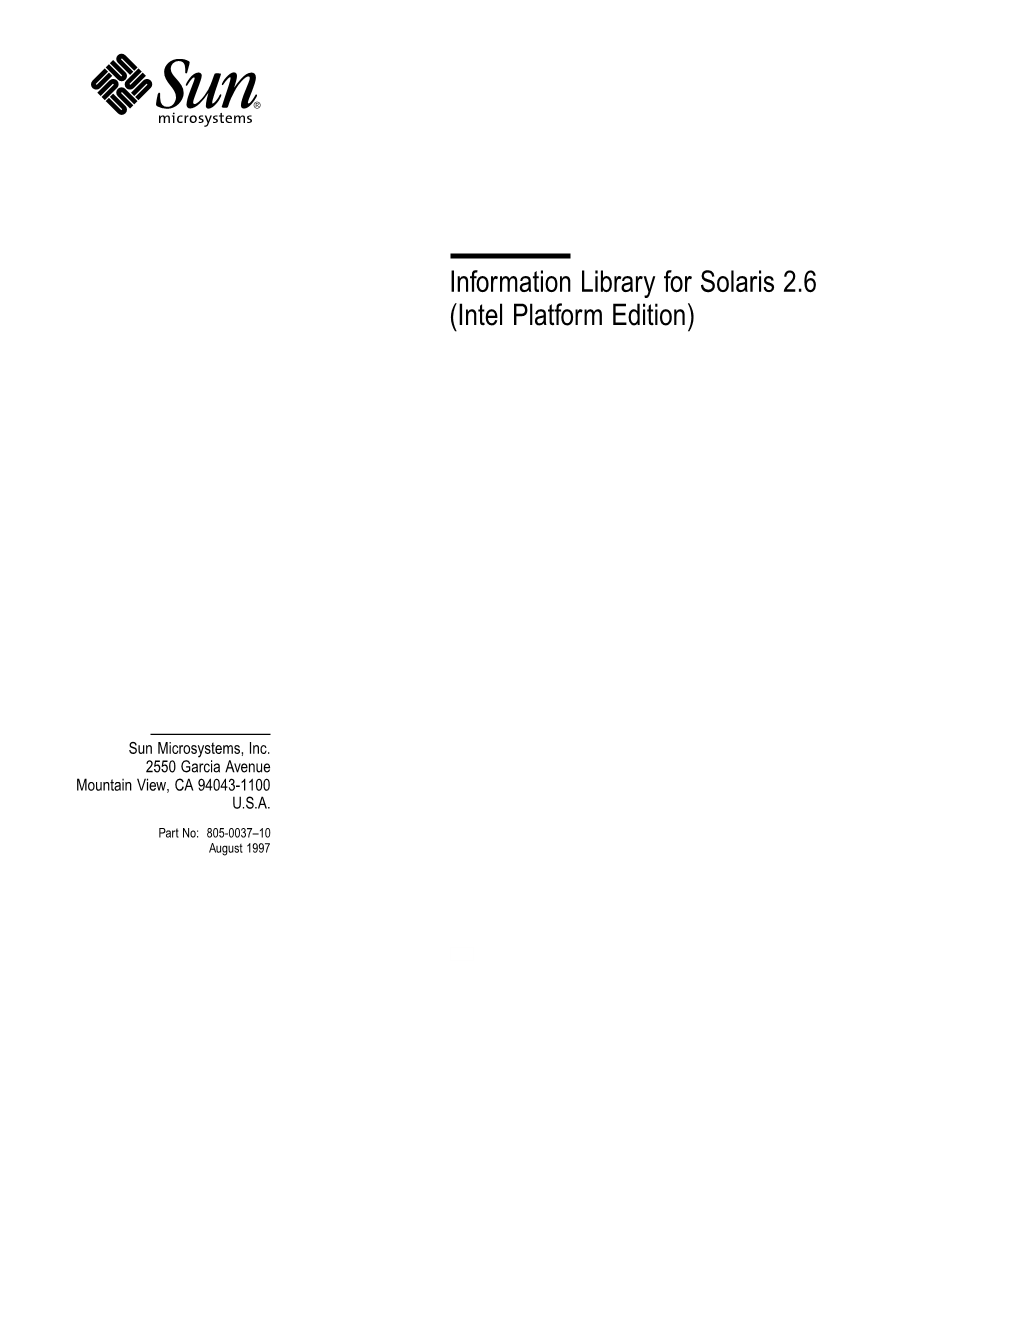 Information Library for Solaris 2.6 (Intel Platform Edition)